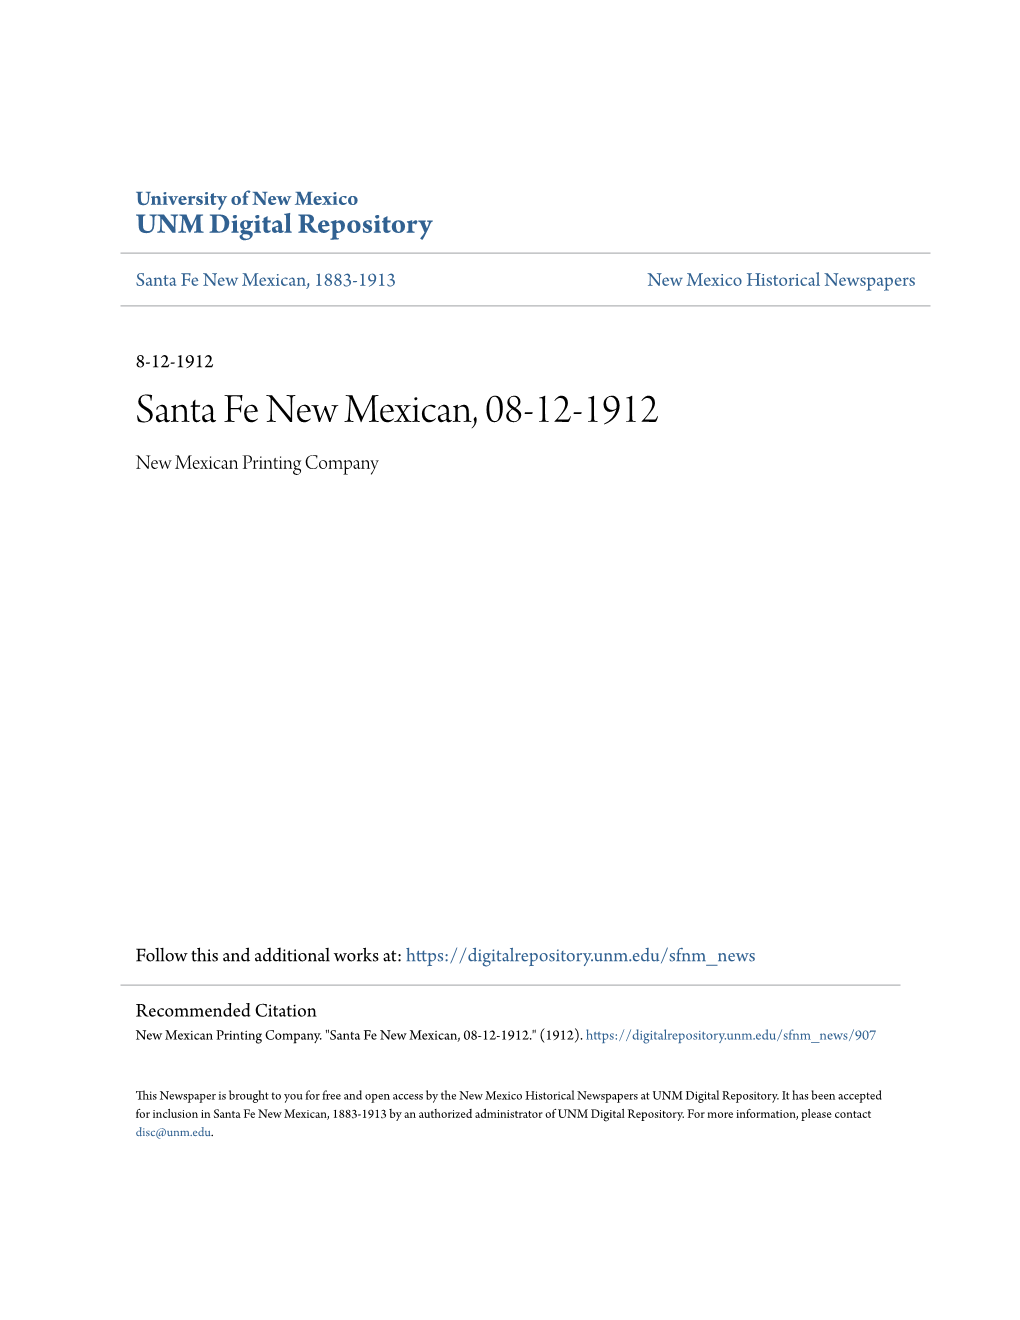 Santa Fe New Mexican, 08-12-1912 New Mexican Printing Company